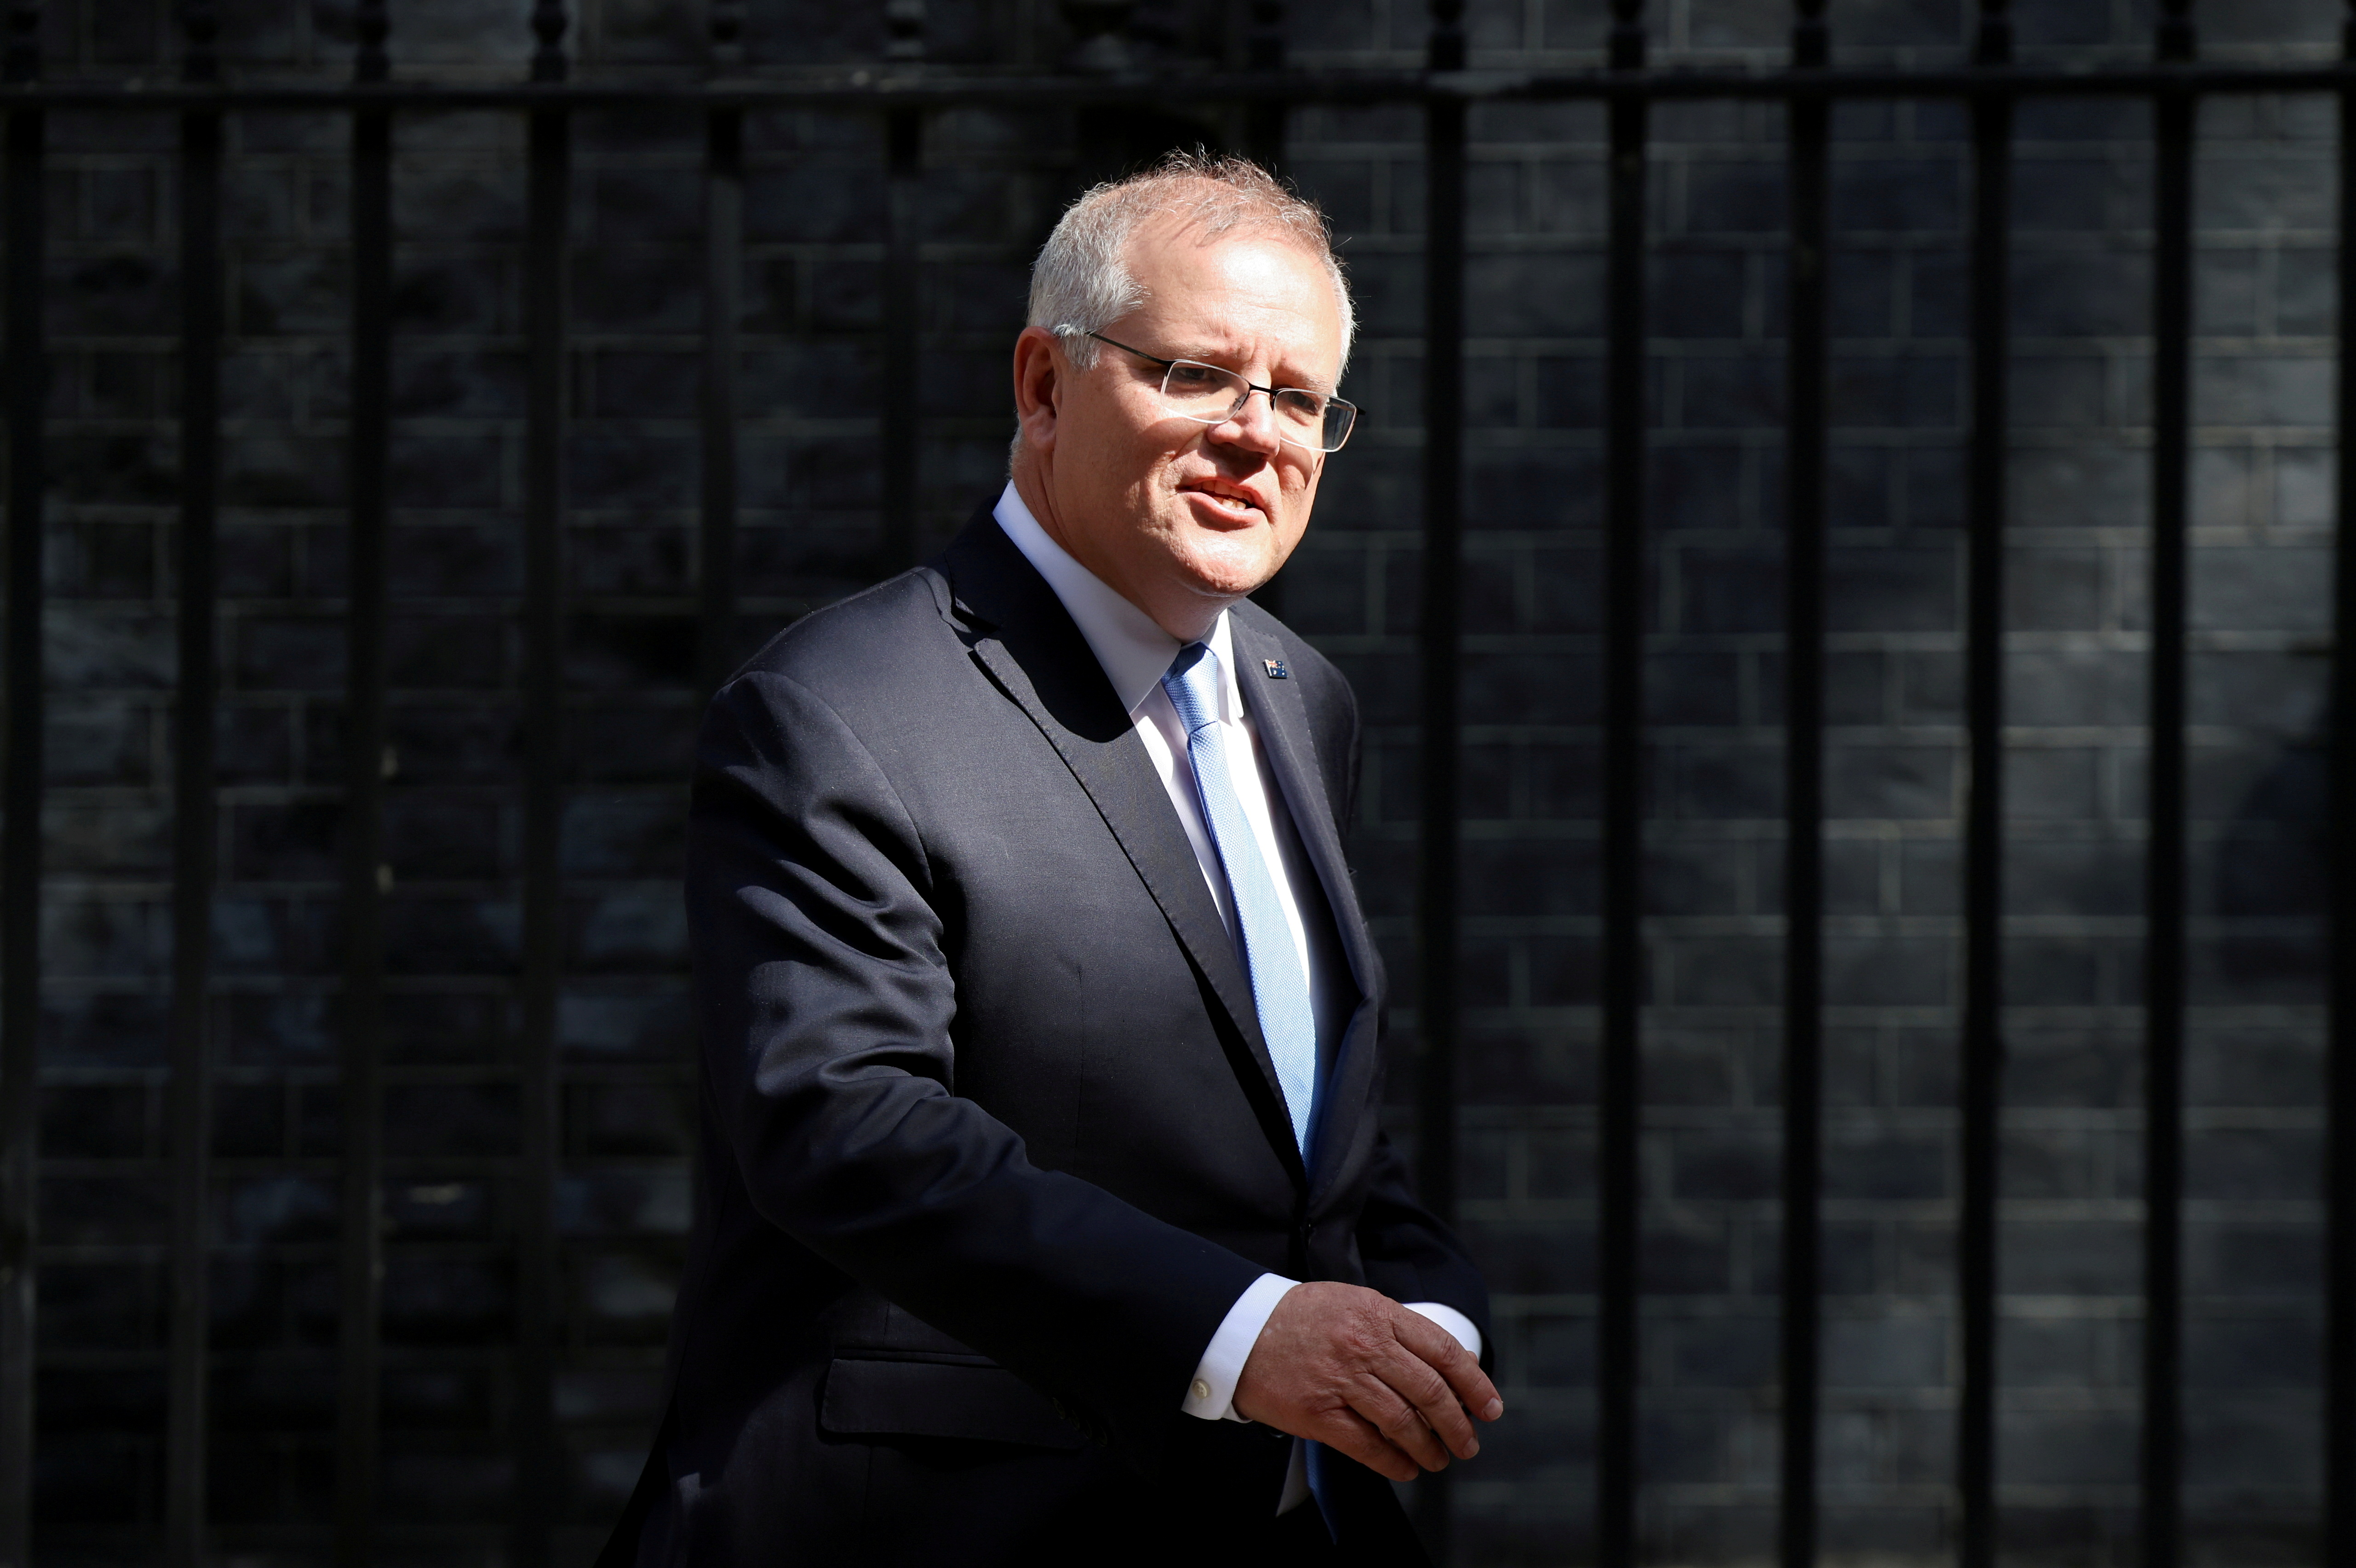 Australian Prime Minister Scott Morrison leaves Downing Street in London, Britain, June 15, 2021. REUTERS/Henry Nicholls/File Photo